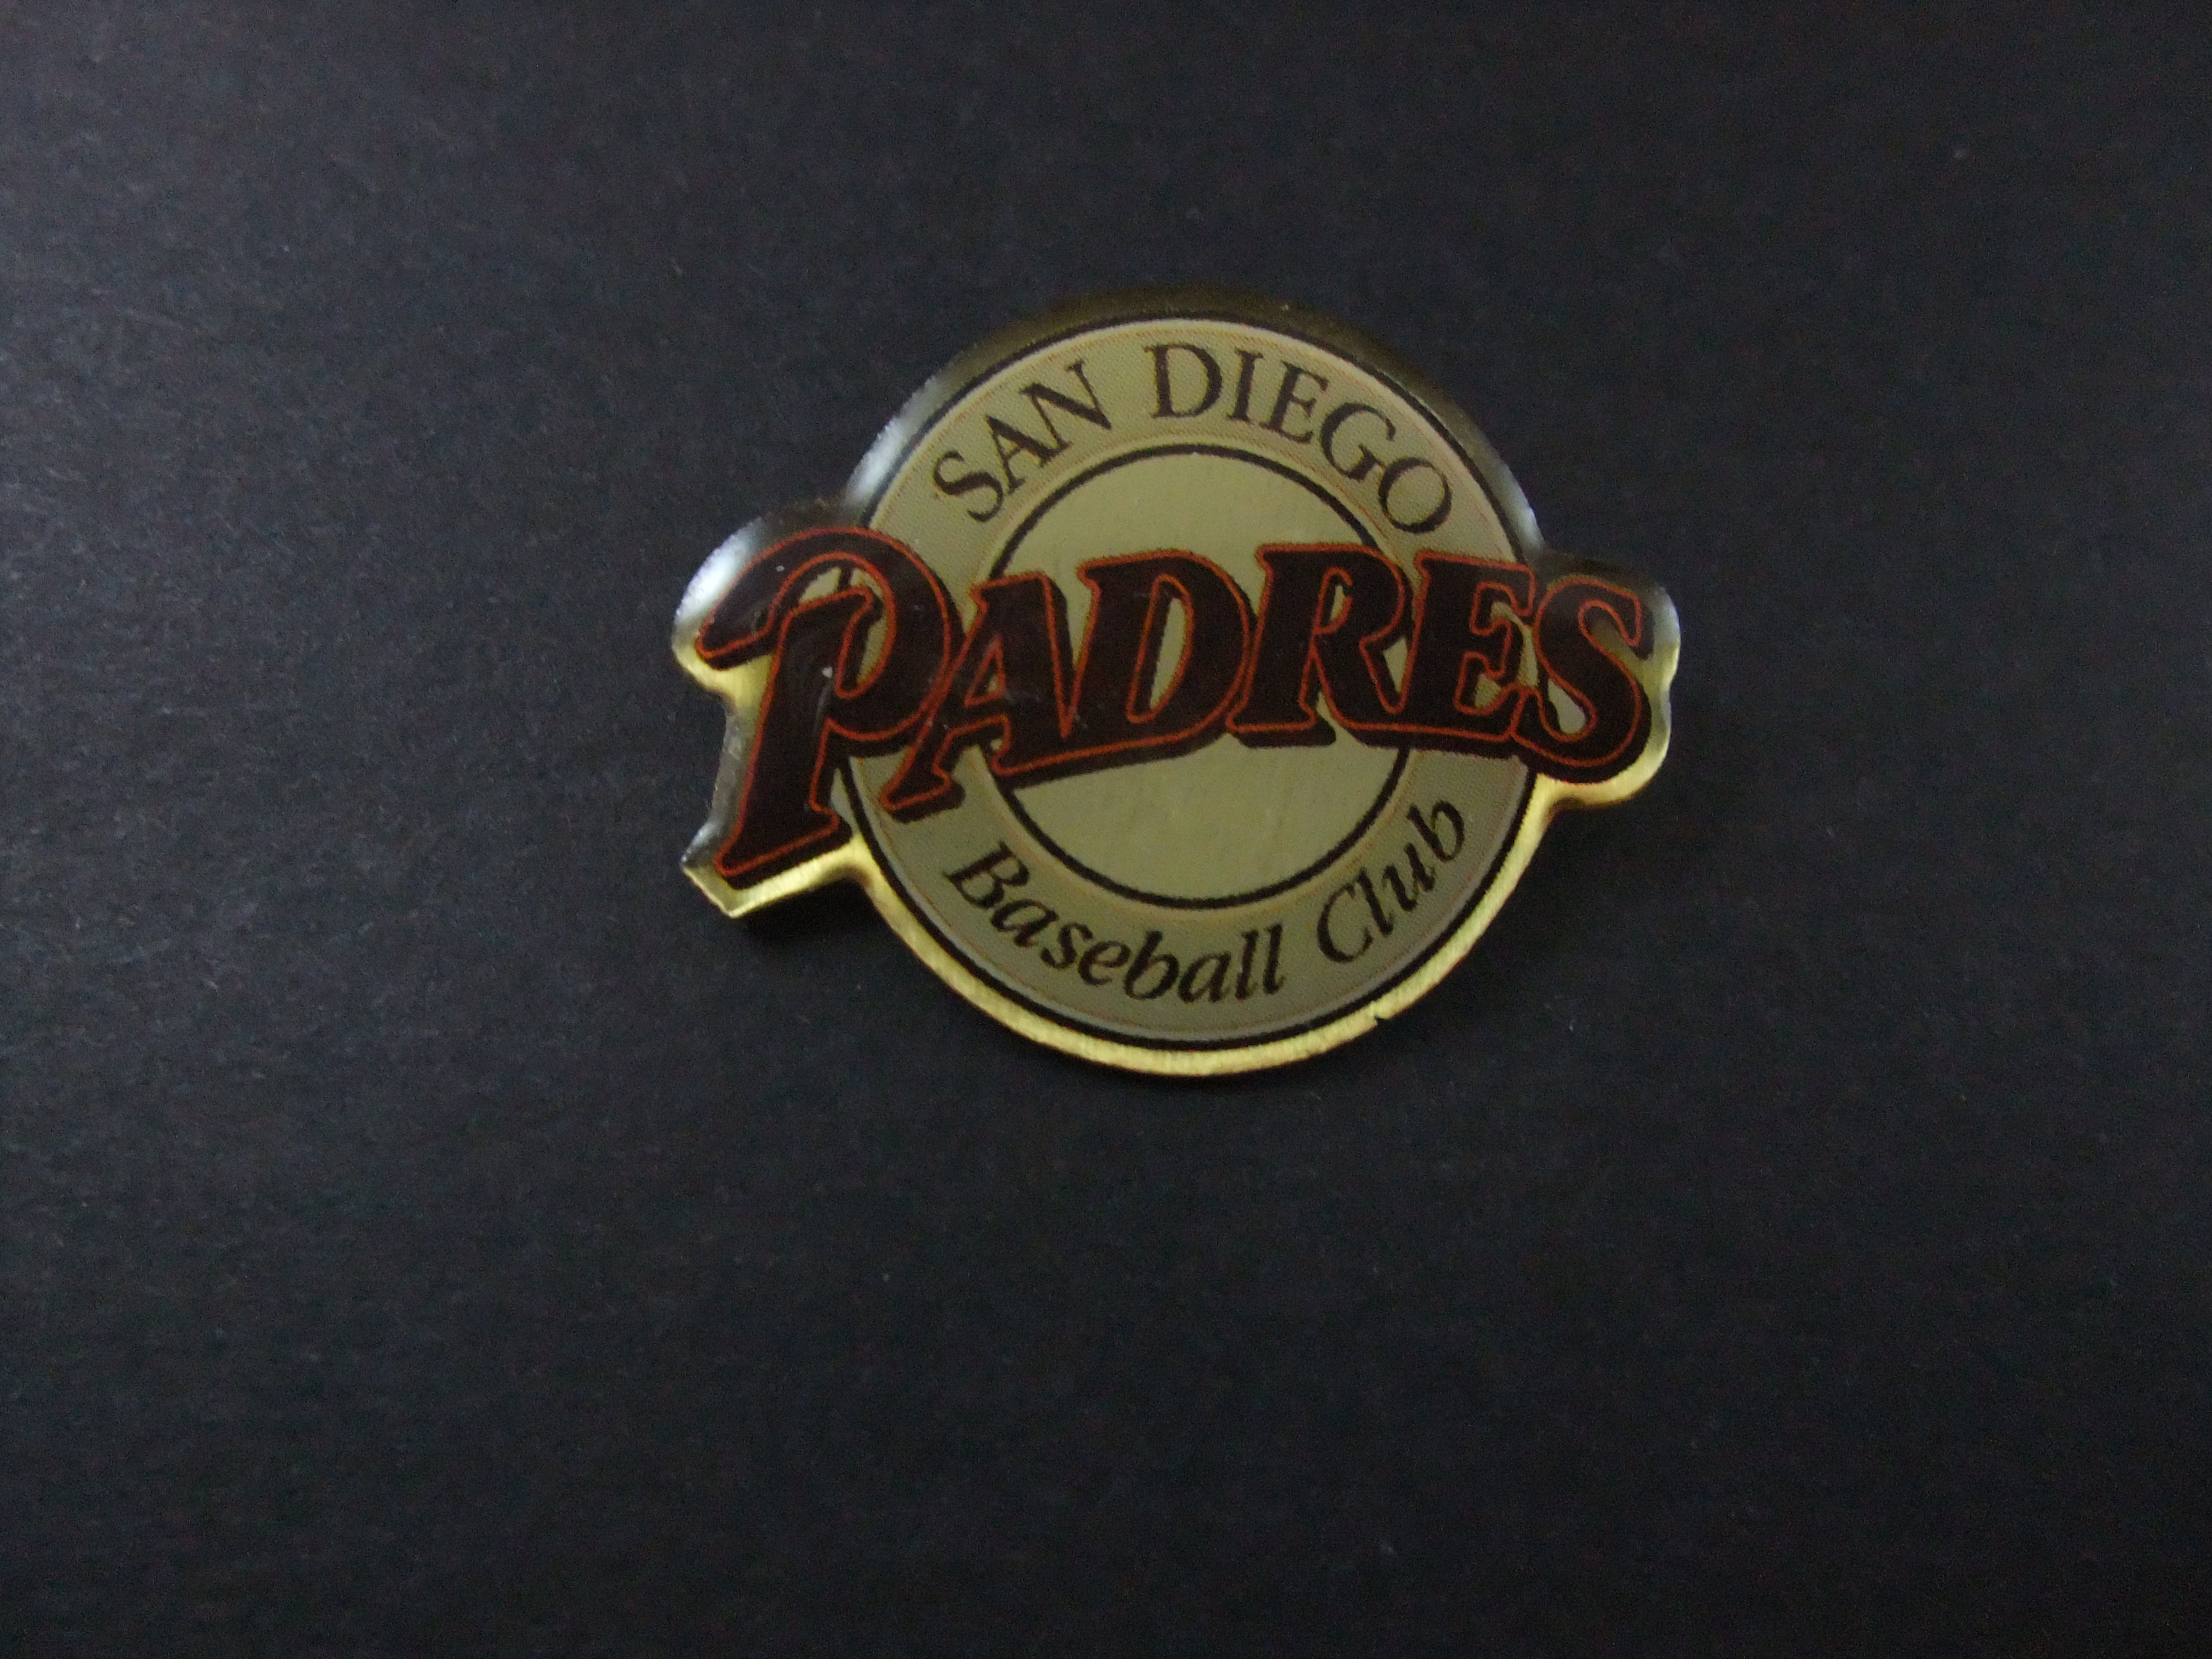 San Diego Padres Major League Baseball club